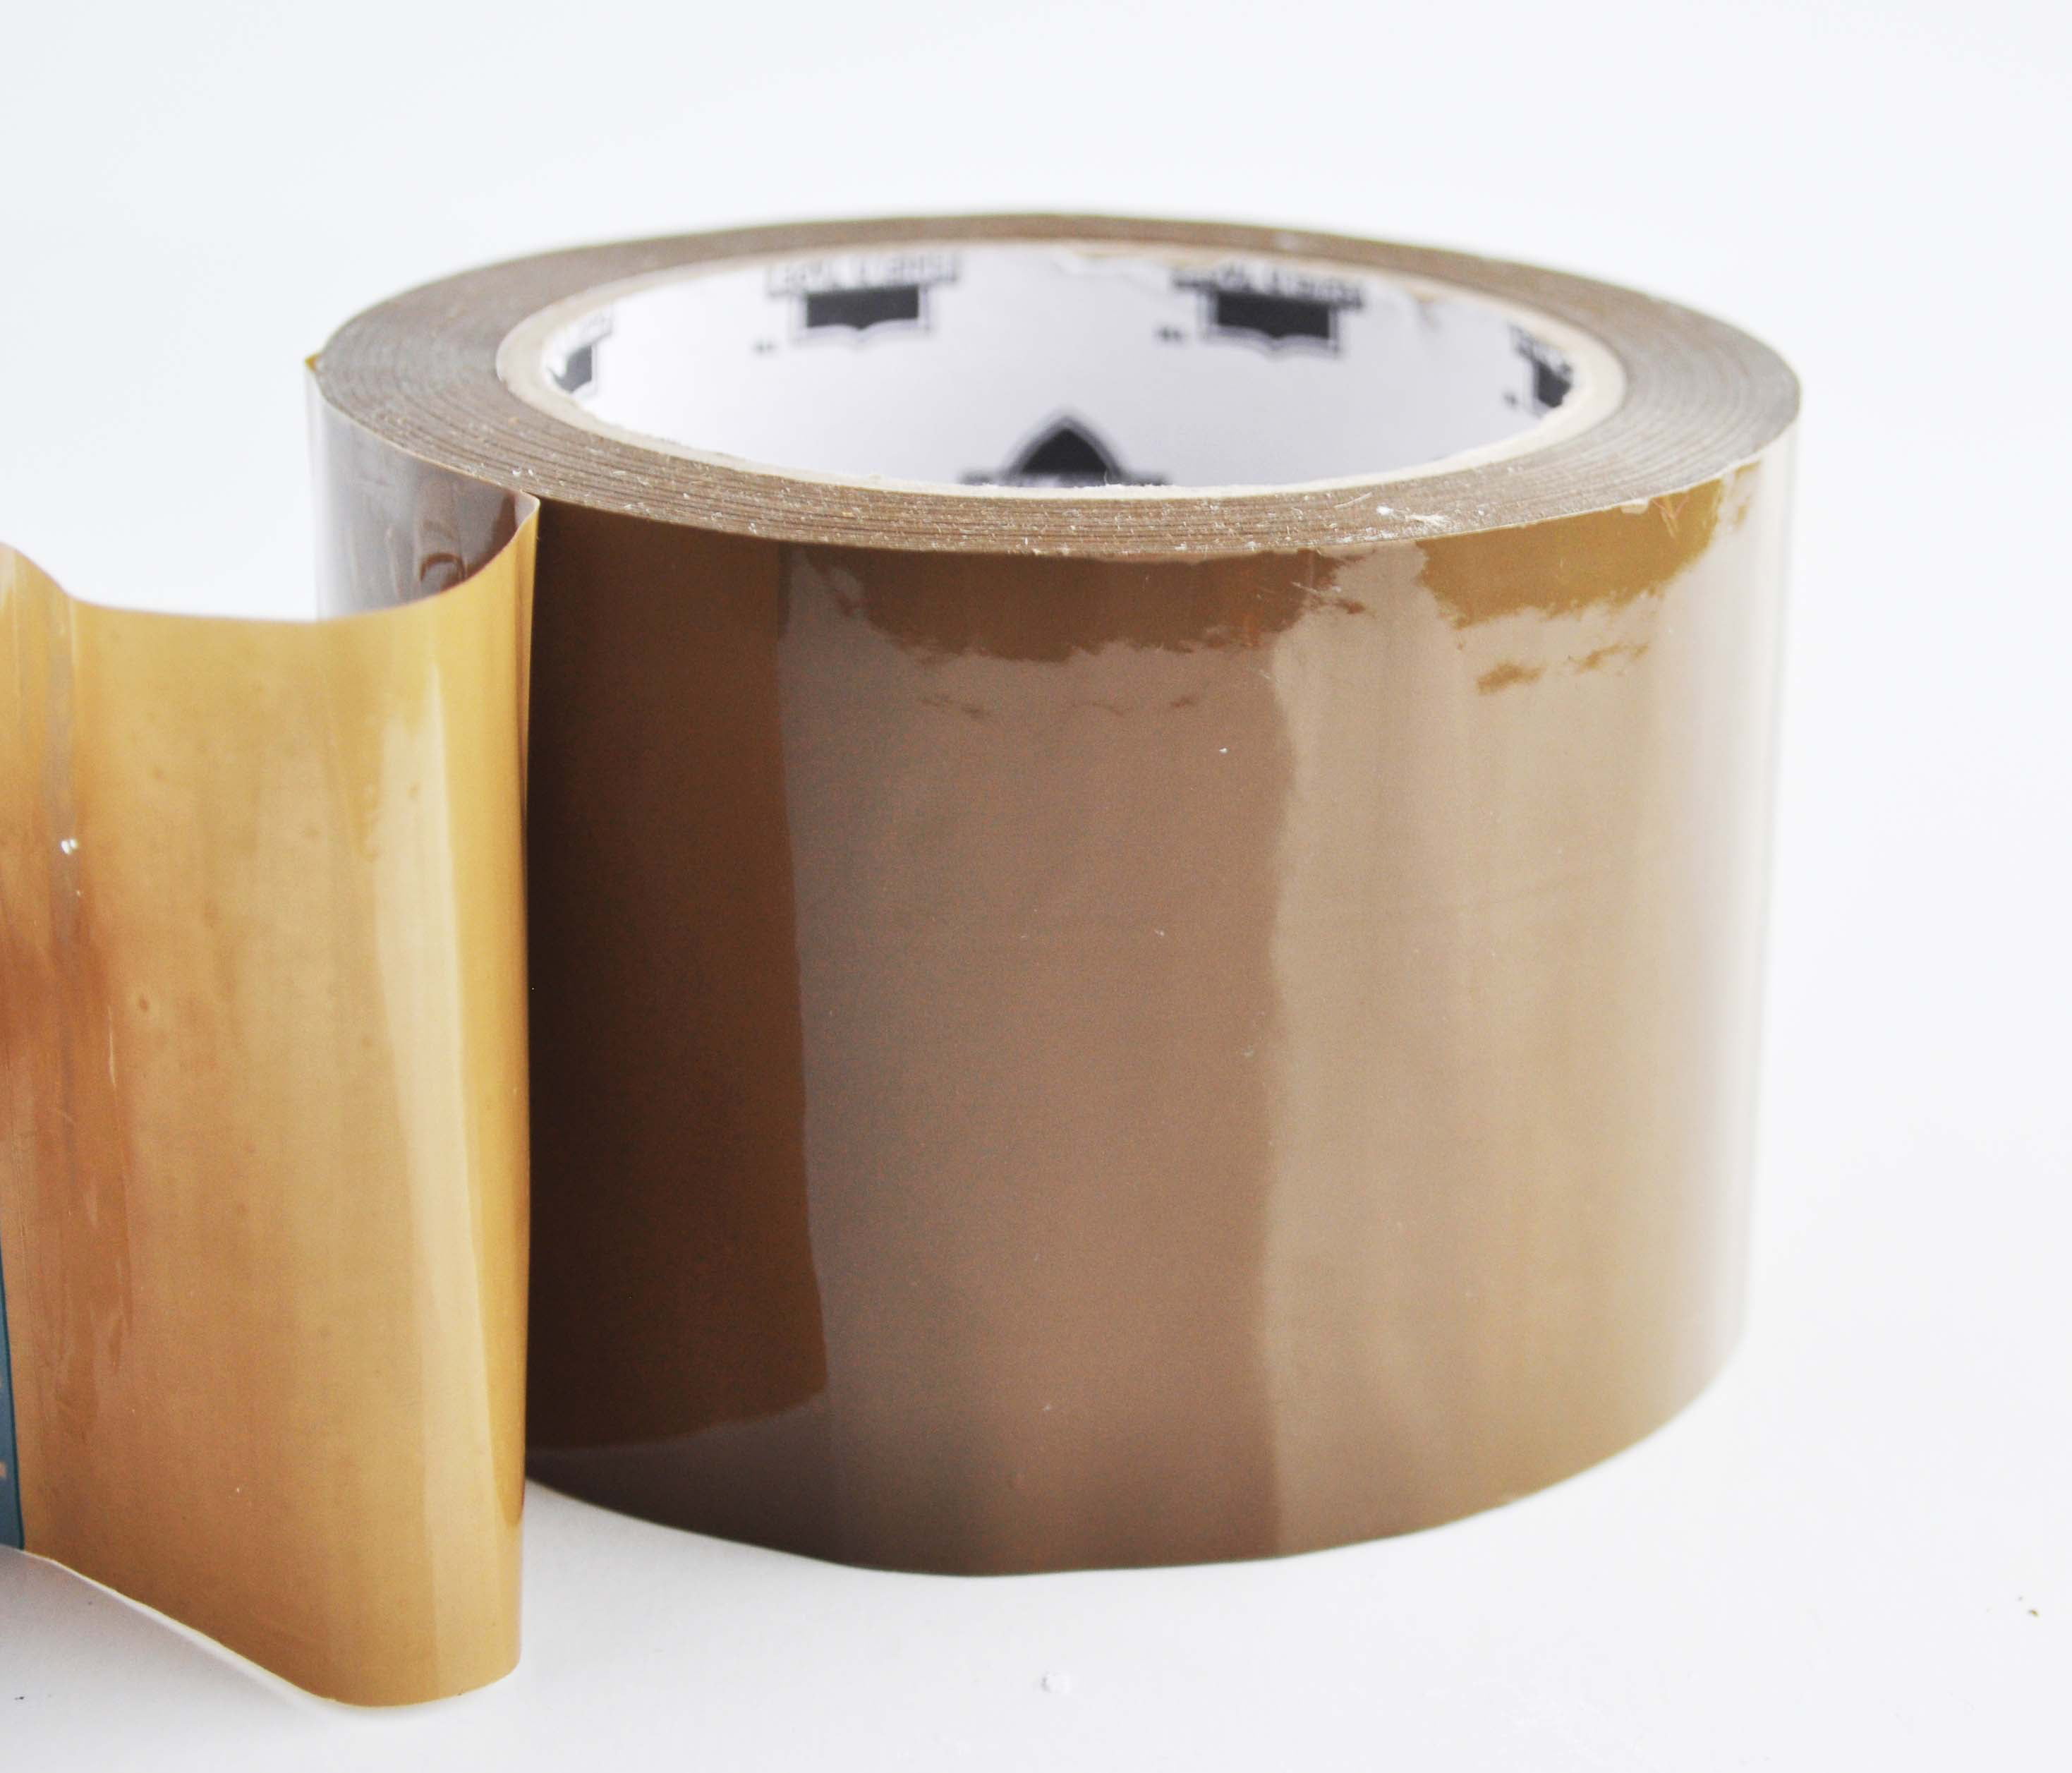 12 Rolls 2" 110 Yards Carton Sealing Packaging Box Shipping Tape Clear 2 Mil 